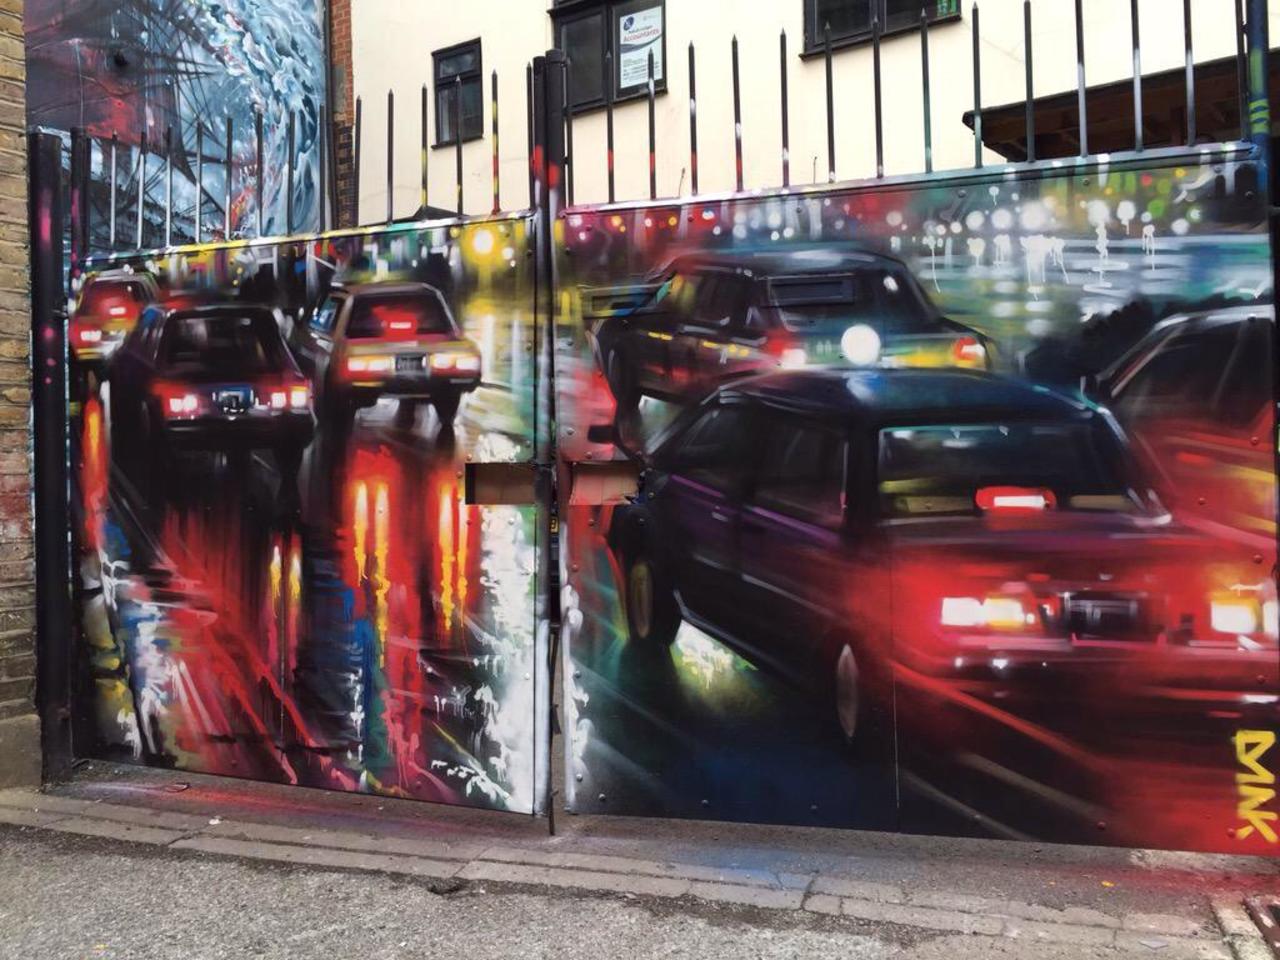 RT @Deepu_Crazen: New Street Art by DanKitchener in Brick Lane London 

#art #graffiti #mural #streetart http://t.co/Fi3OYGkZEL